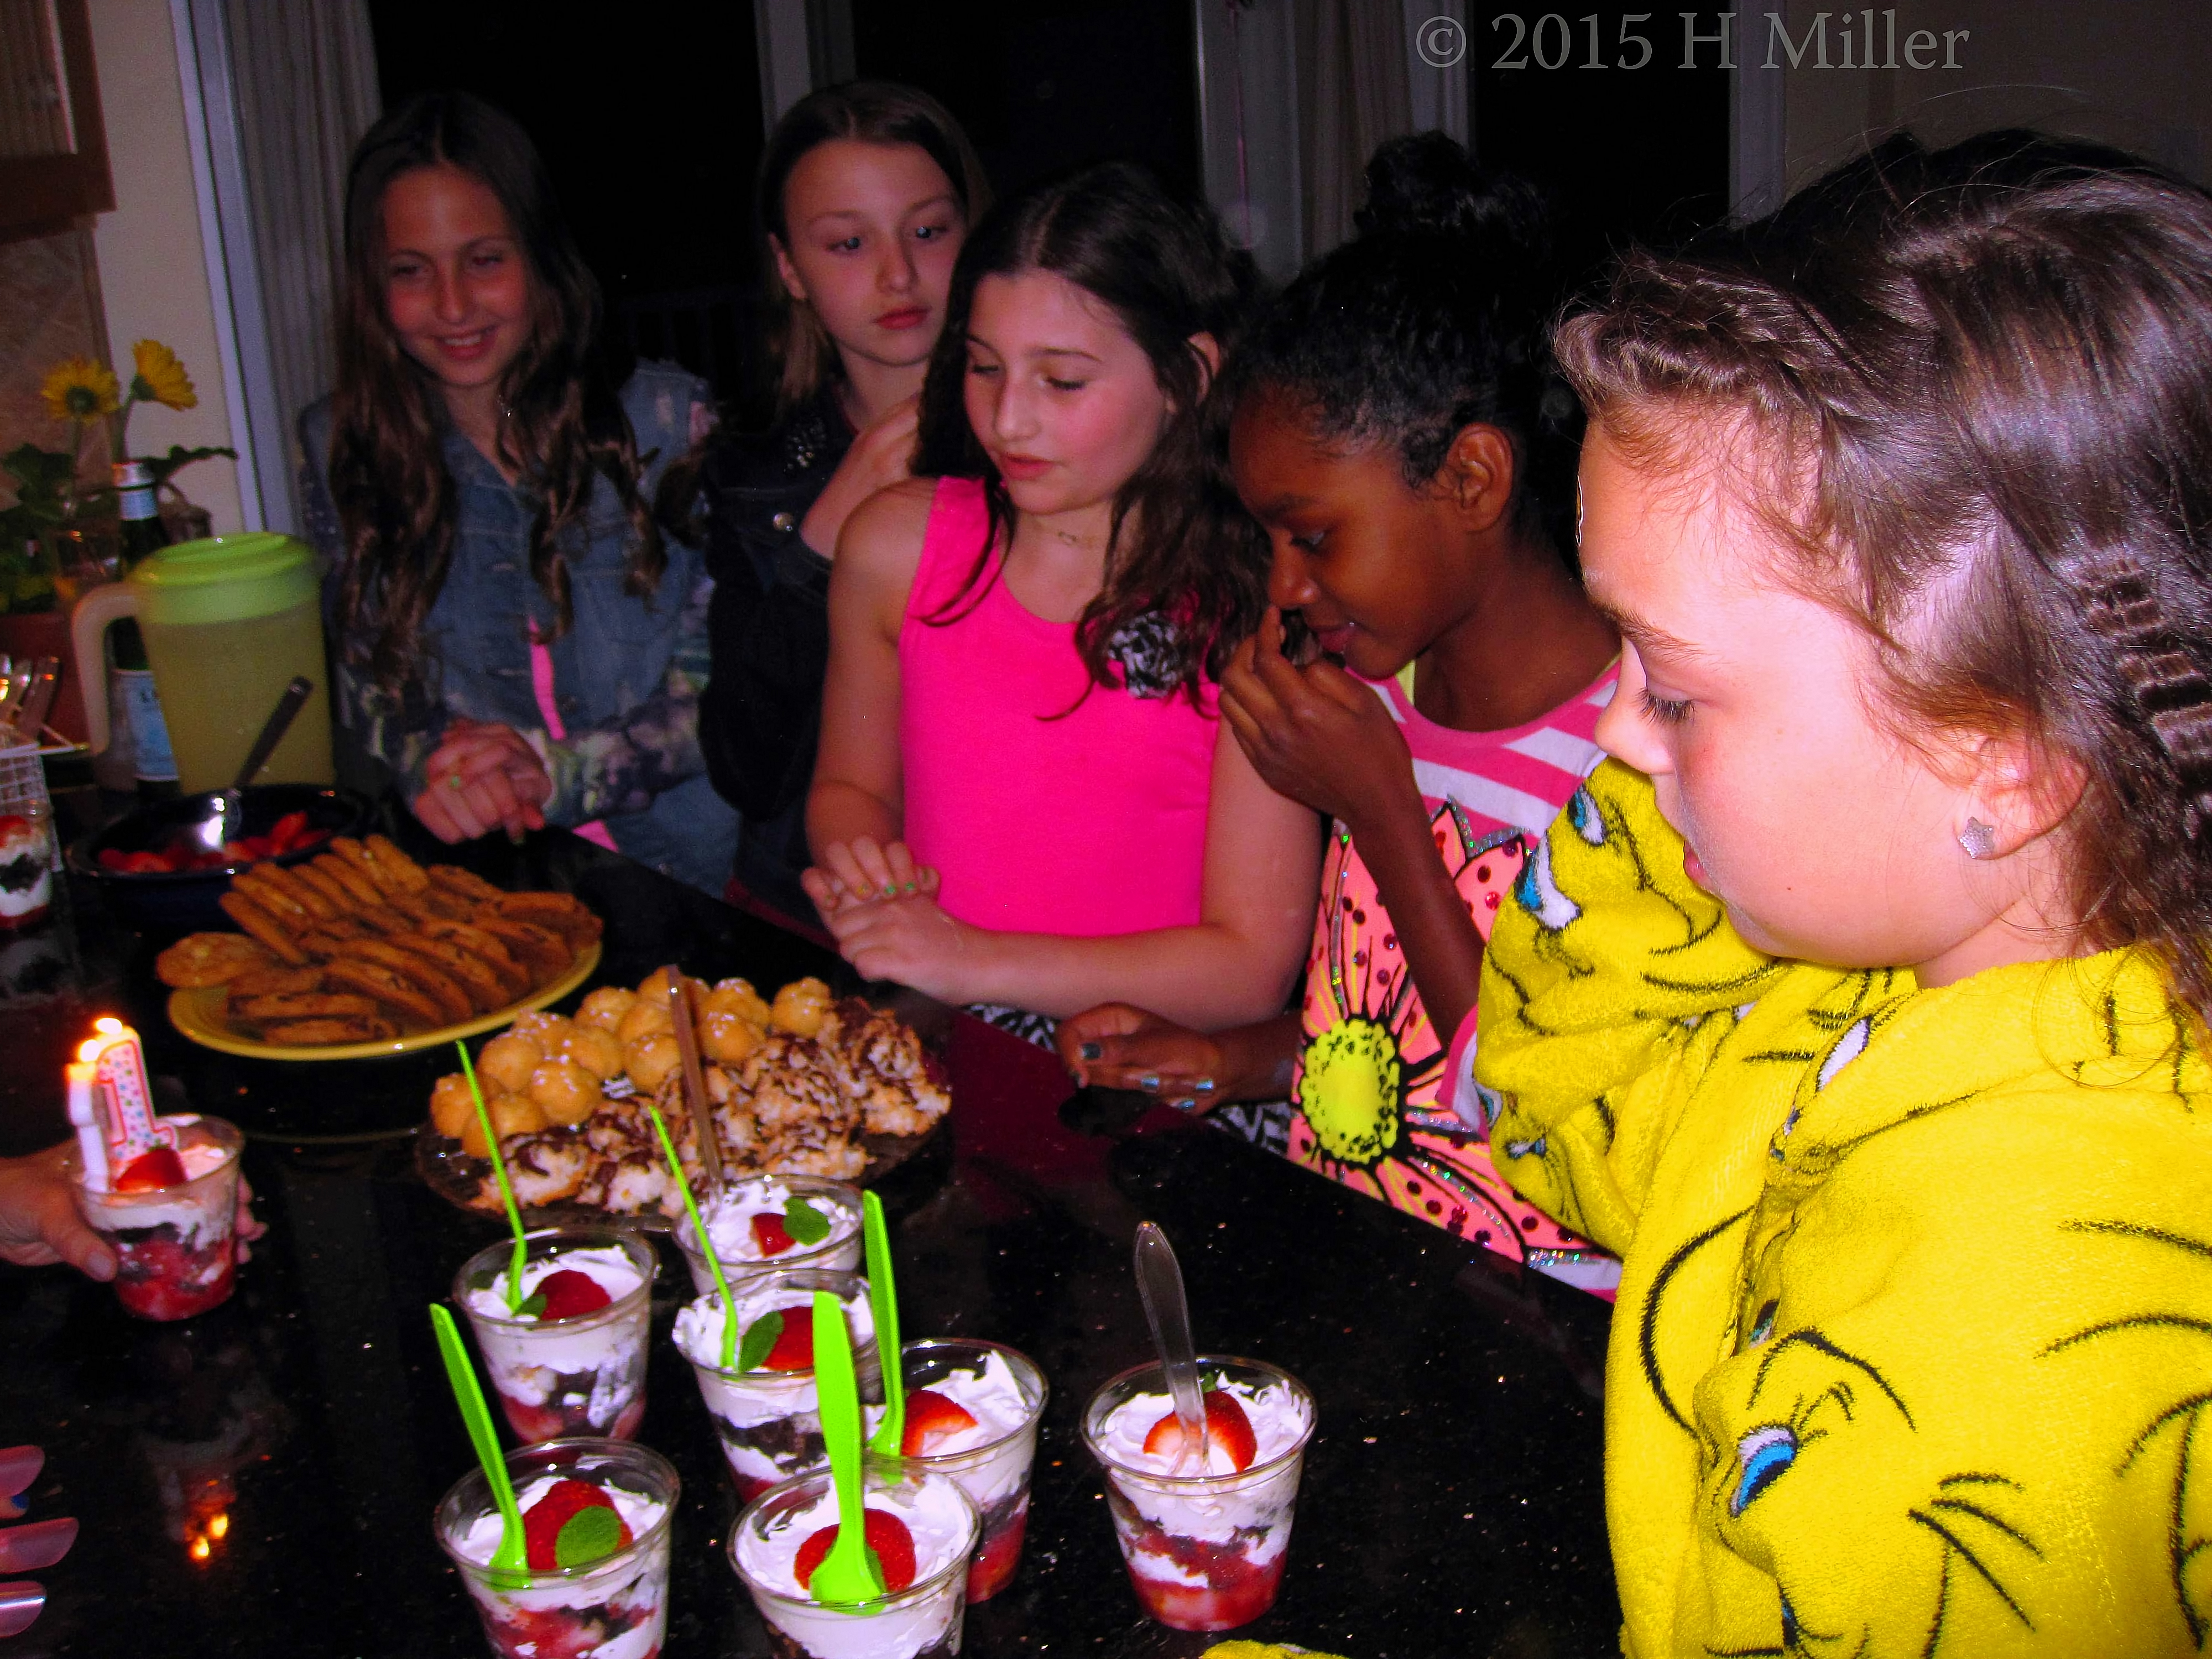 Yummy Treats! The Girls Definitely Feel The Desserts Look Tasty! 